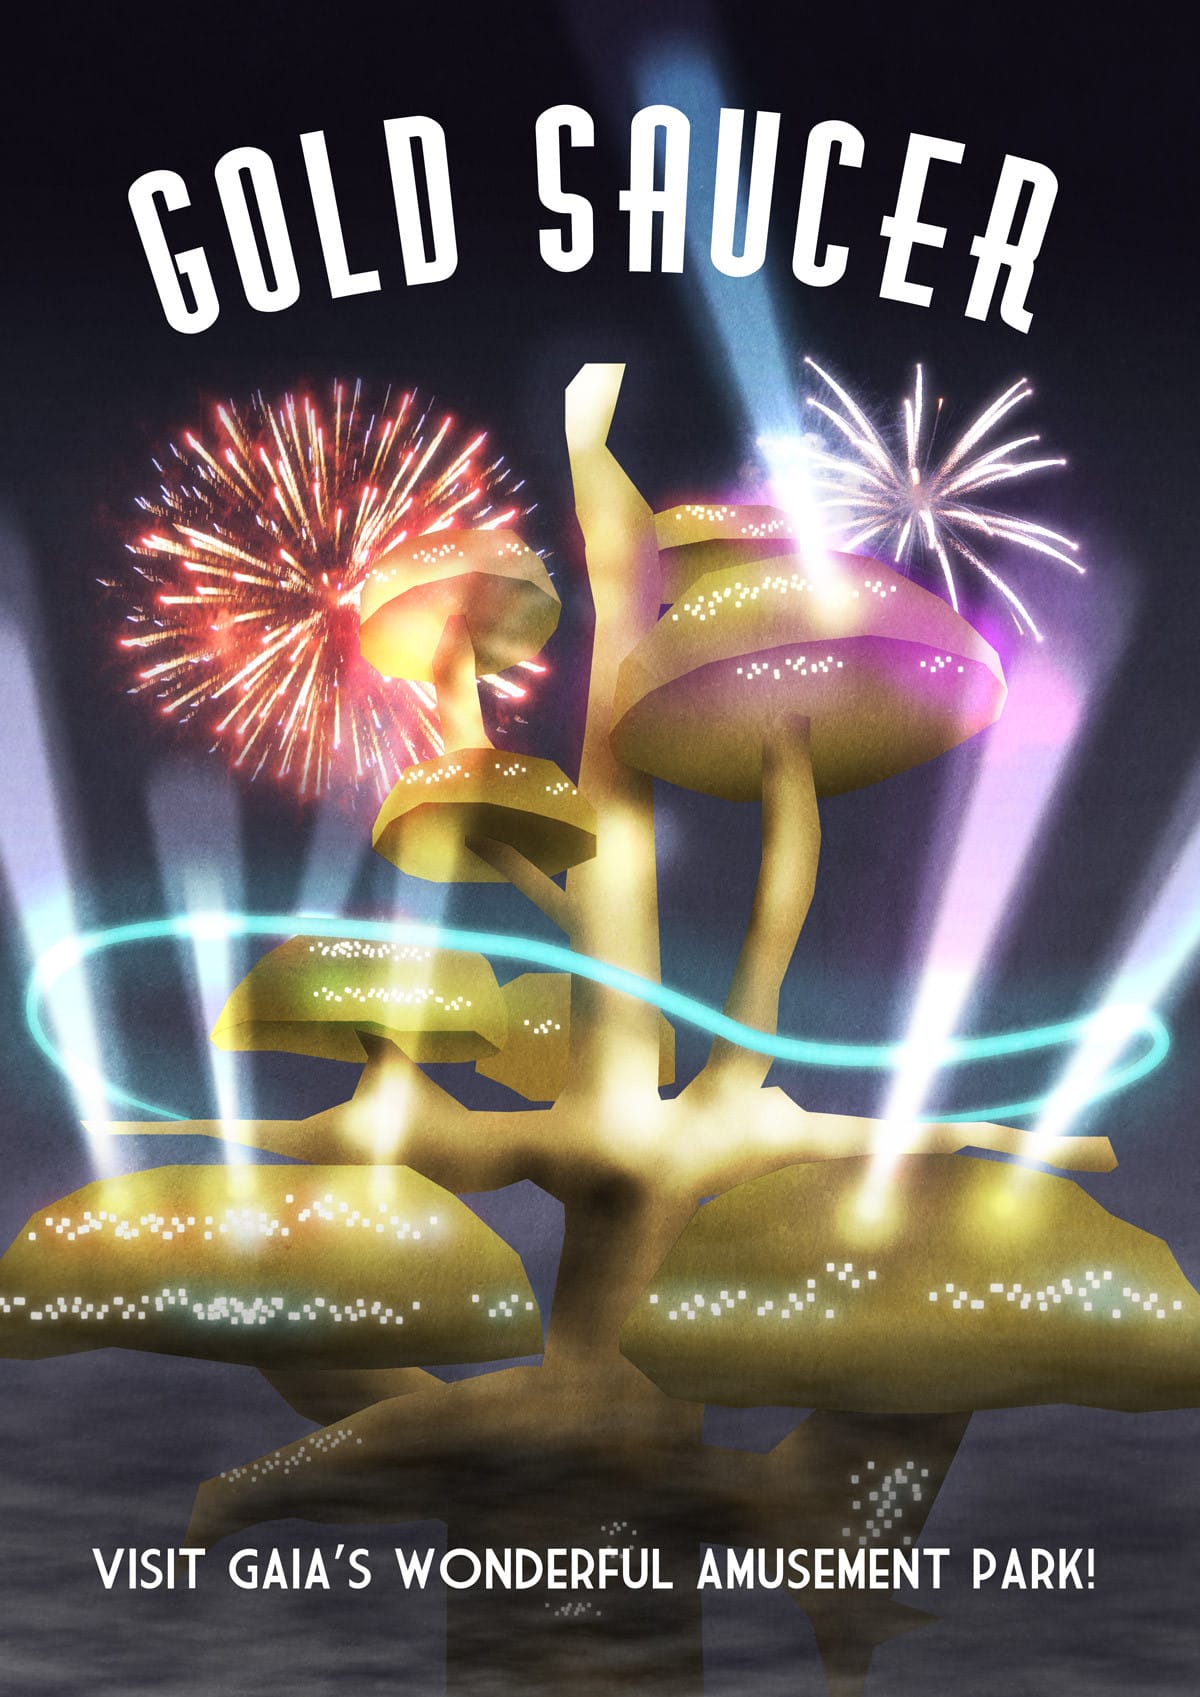 gold-saucer-final-fantasy-vii-travel-posters_1